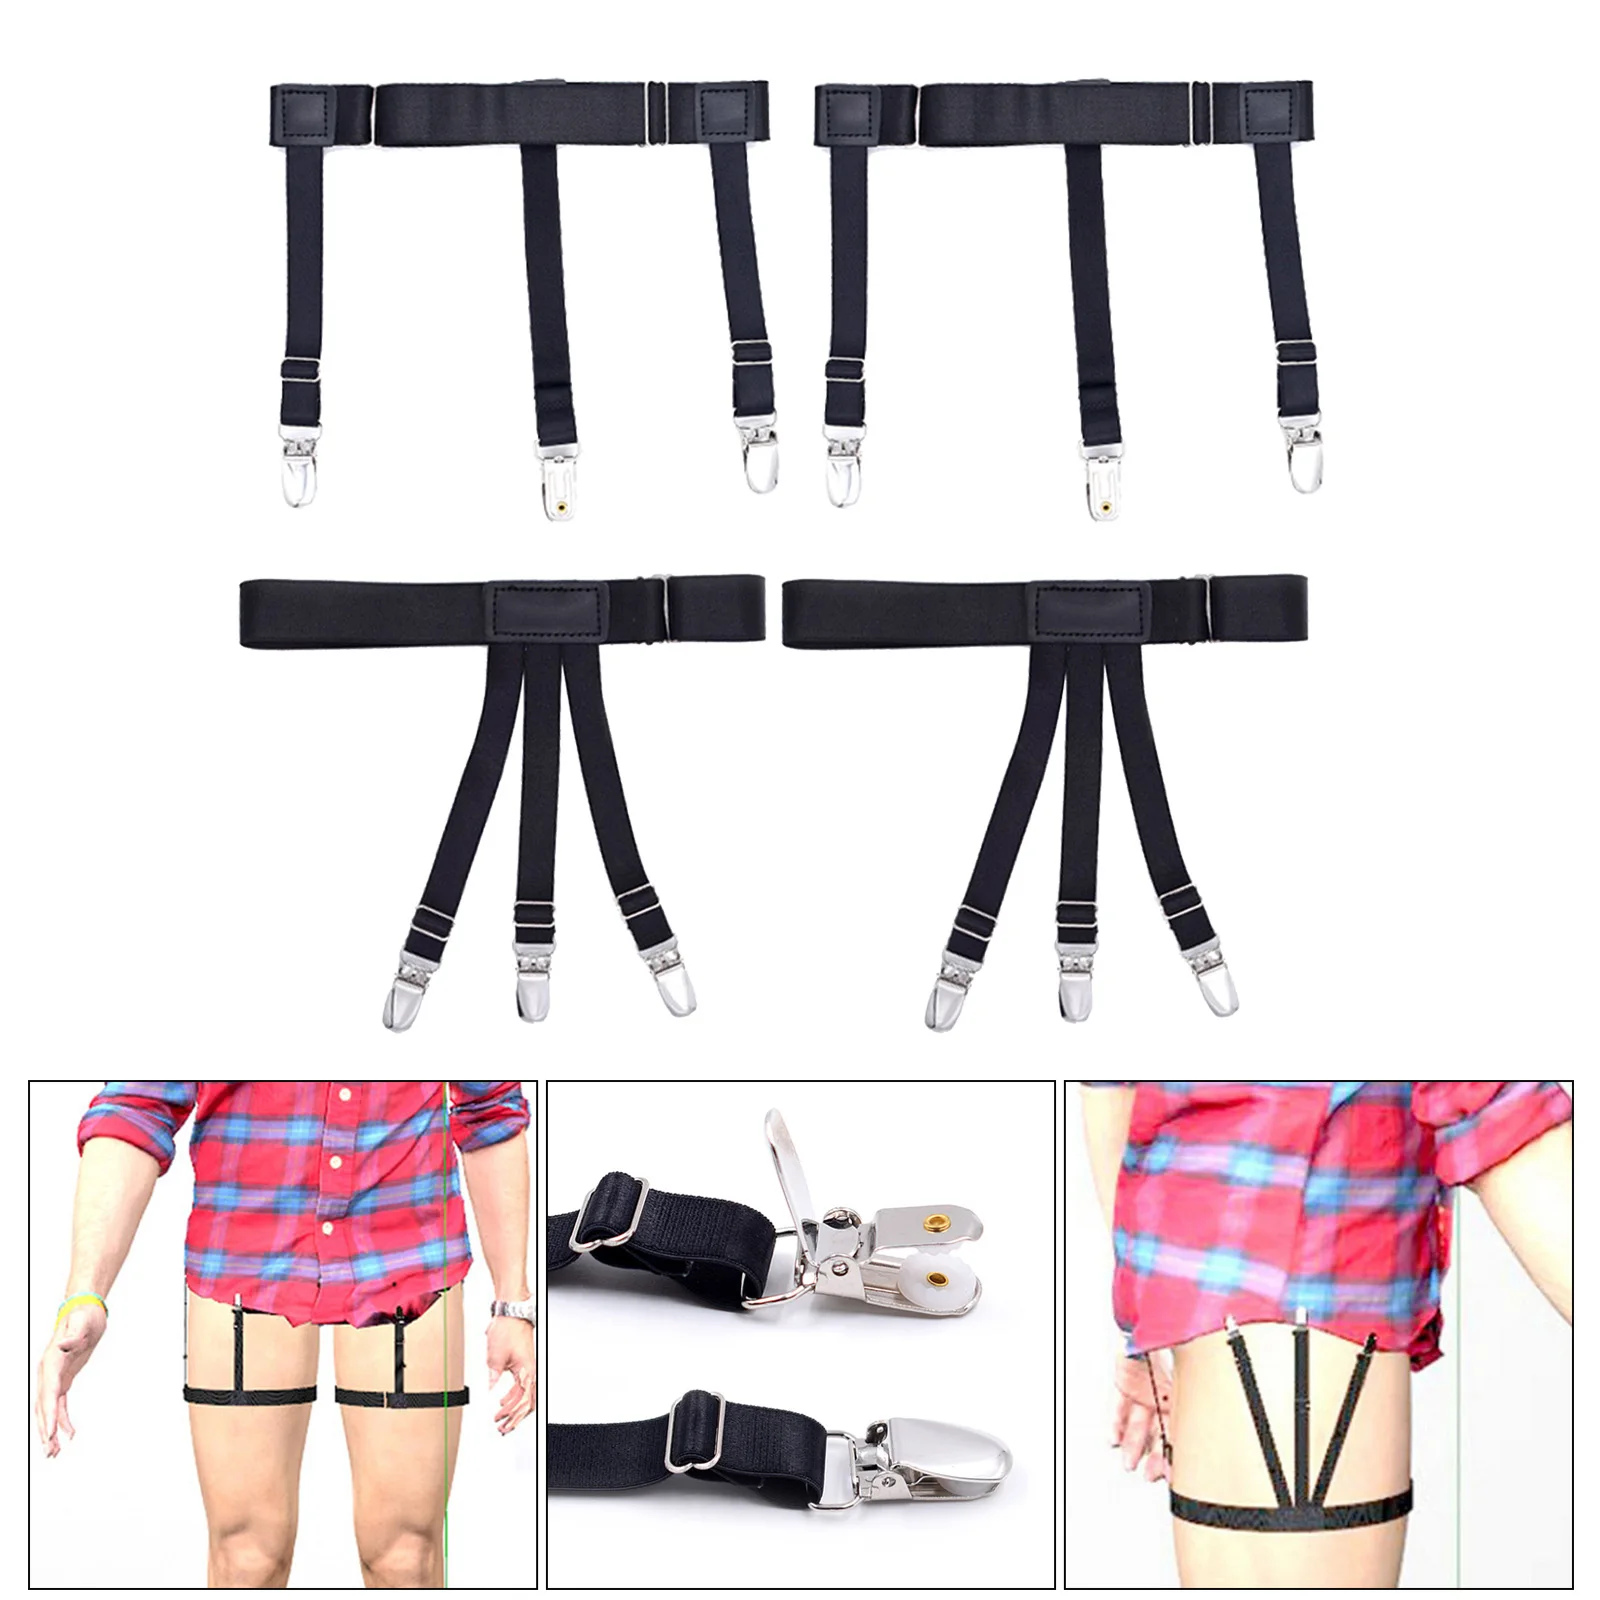 2x Shirt Stays Leg Garter Suspender Holders Adjustable Professional Men